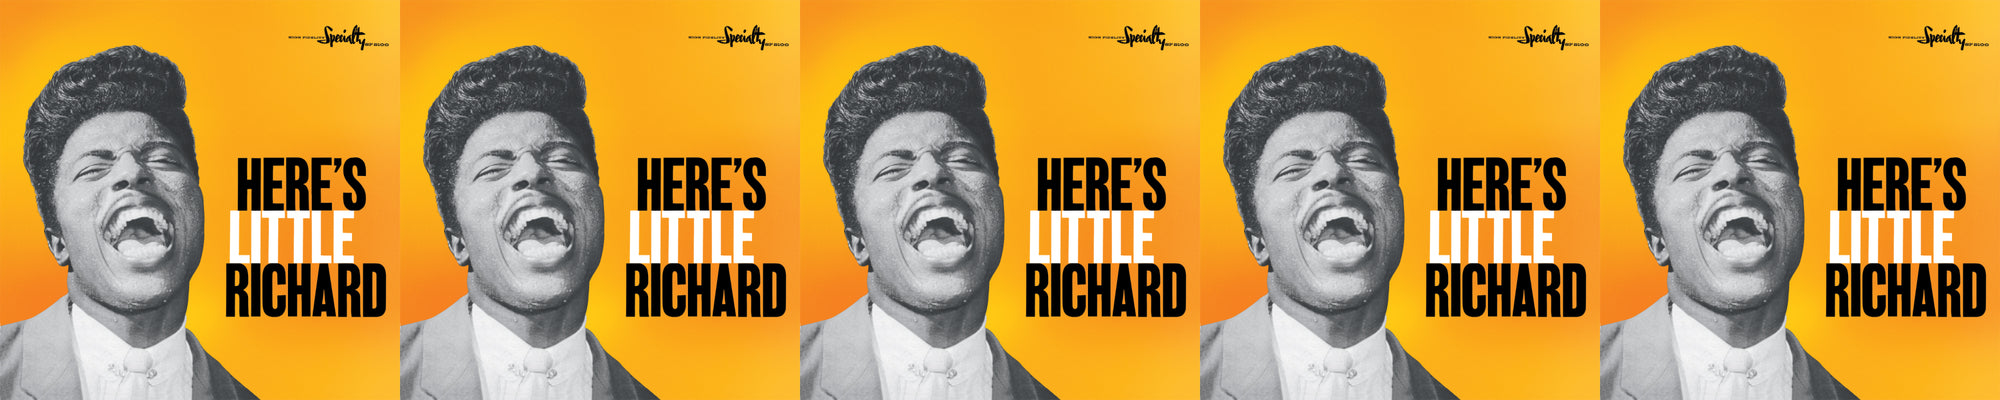 Little RichardHere's Little Richard